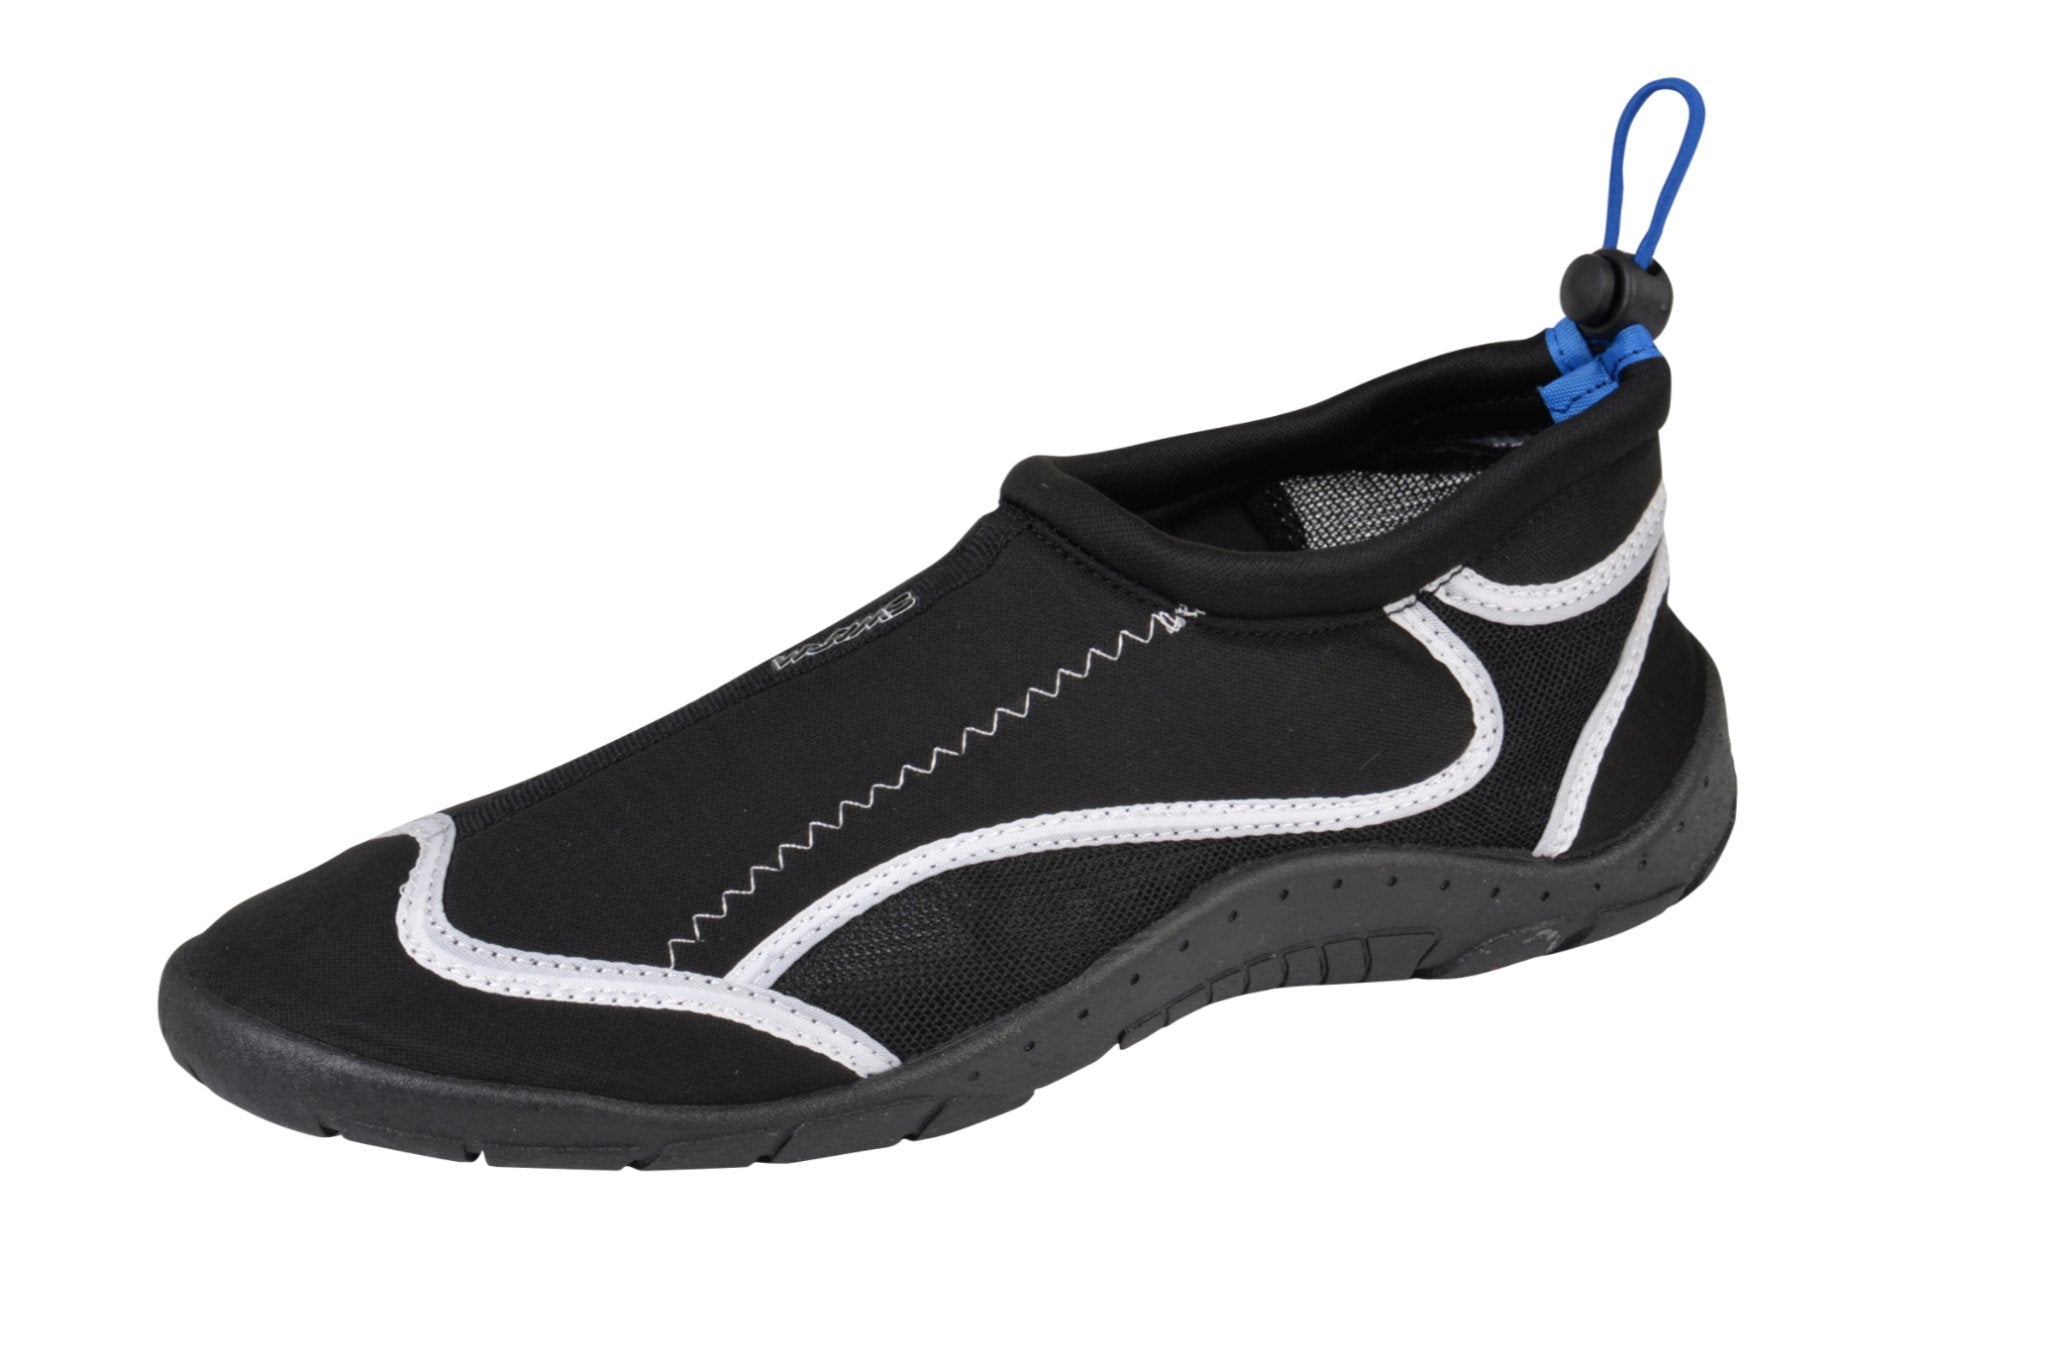 Typhoon Adult Aqua / Beach Shoes - Swarm - Worthing Watersports - Shoes - Typhoon